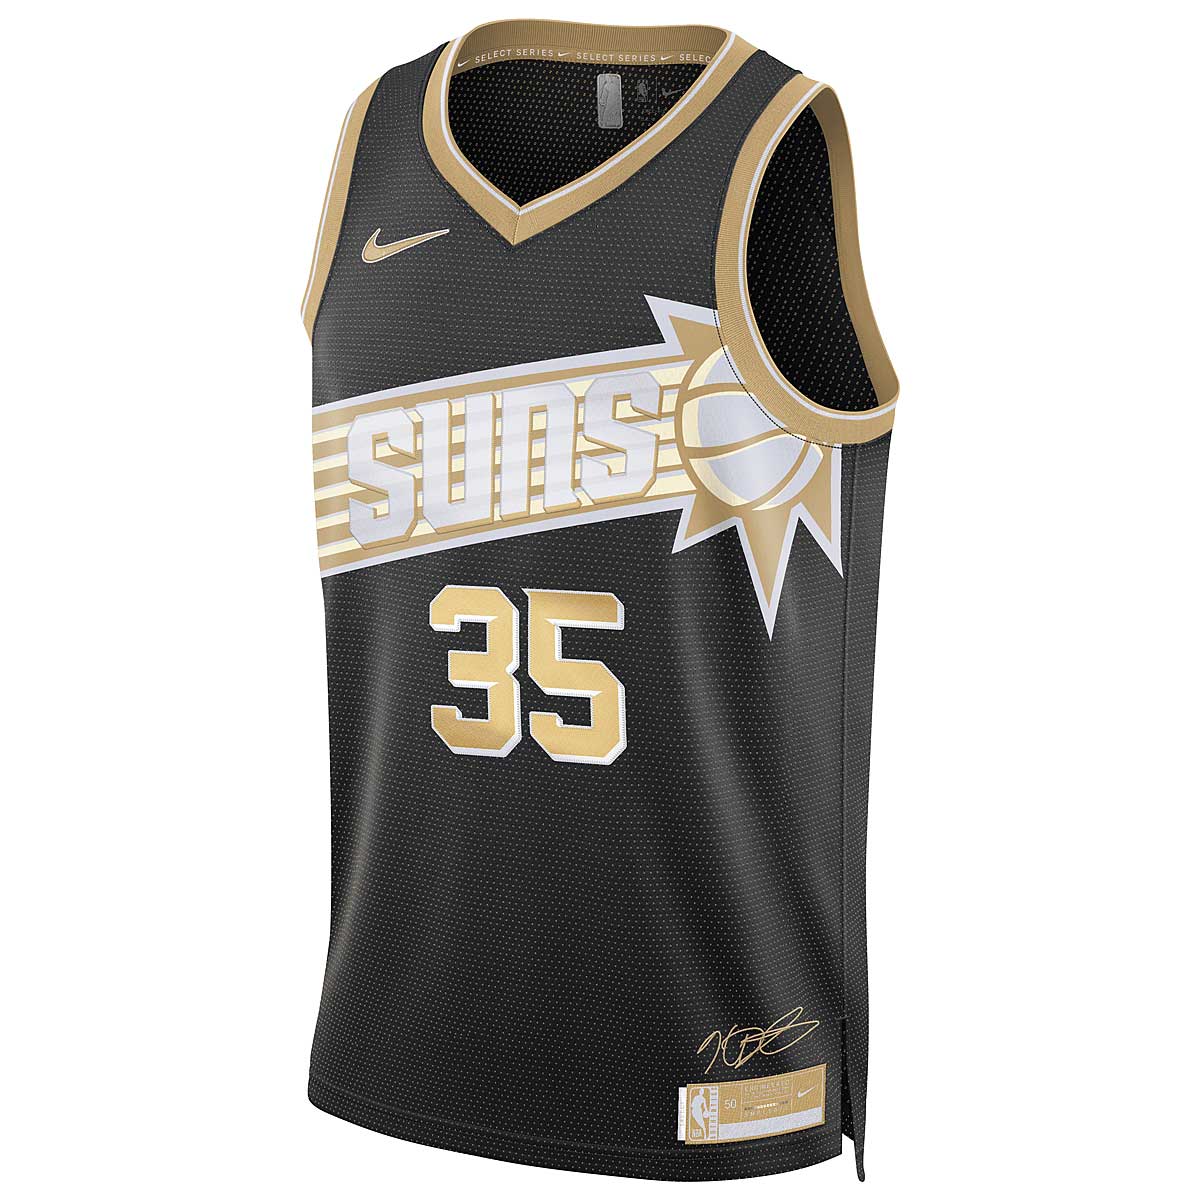 Image of Nike NBA Phoenix Suns Dri-fit Select Series Swingman Jersey Kevin Durant, Black/club Gold